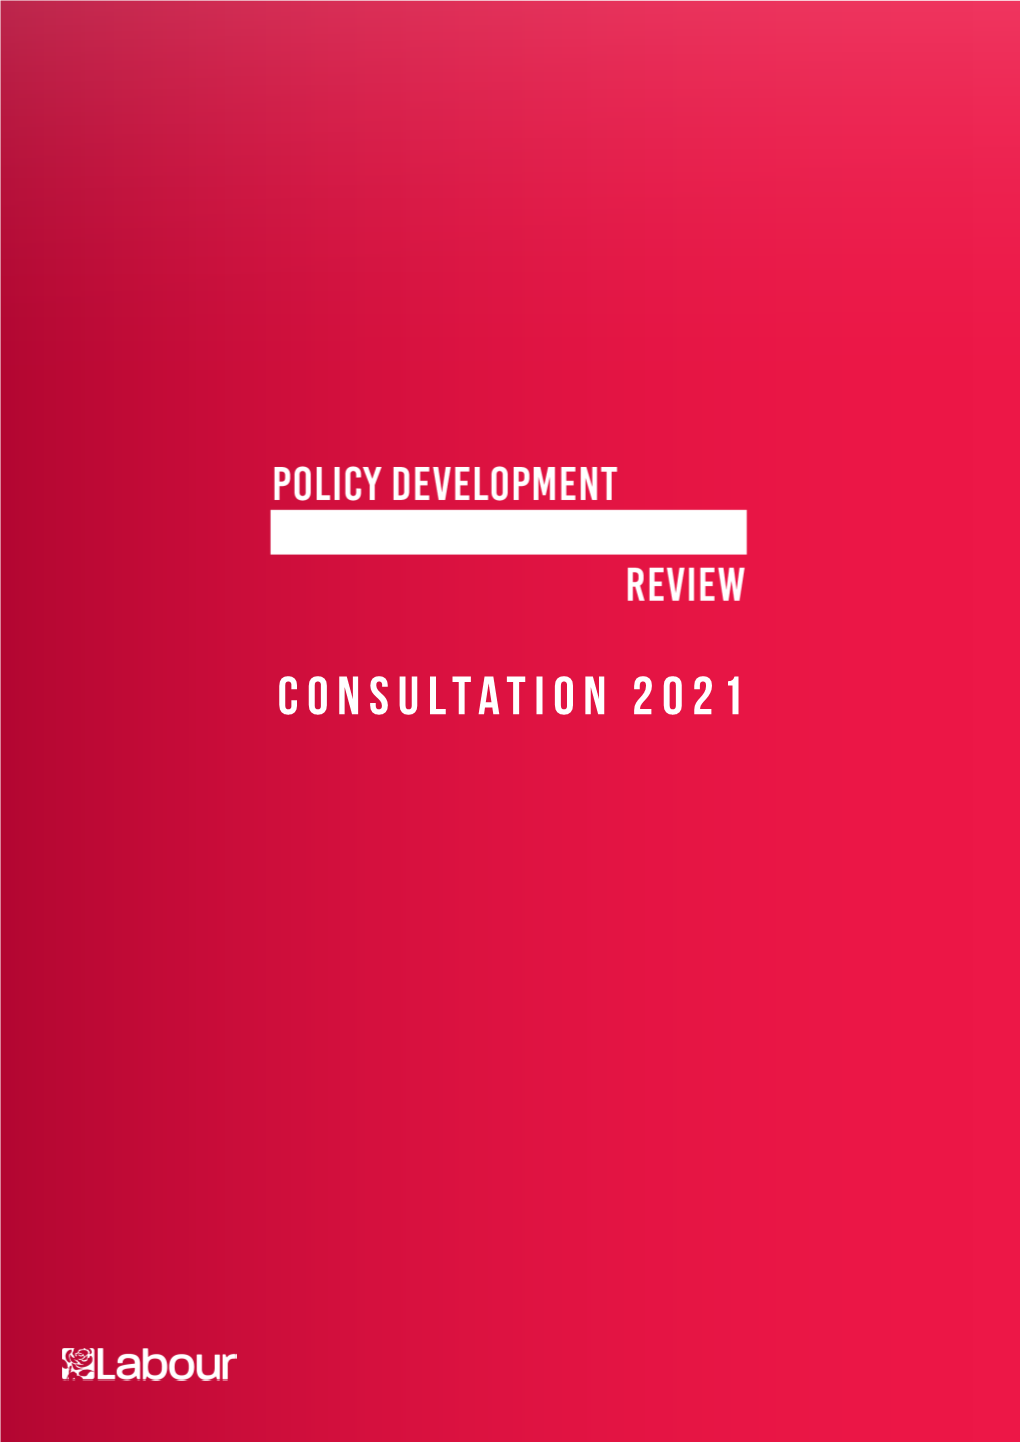 Consultation 2021 Contents